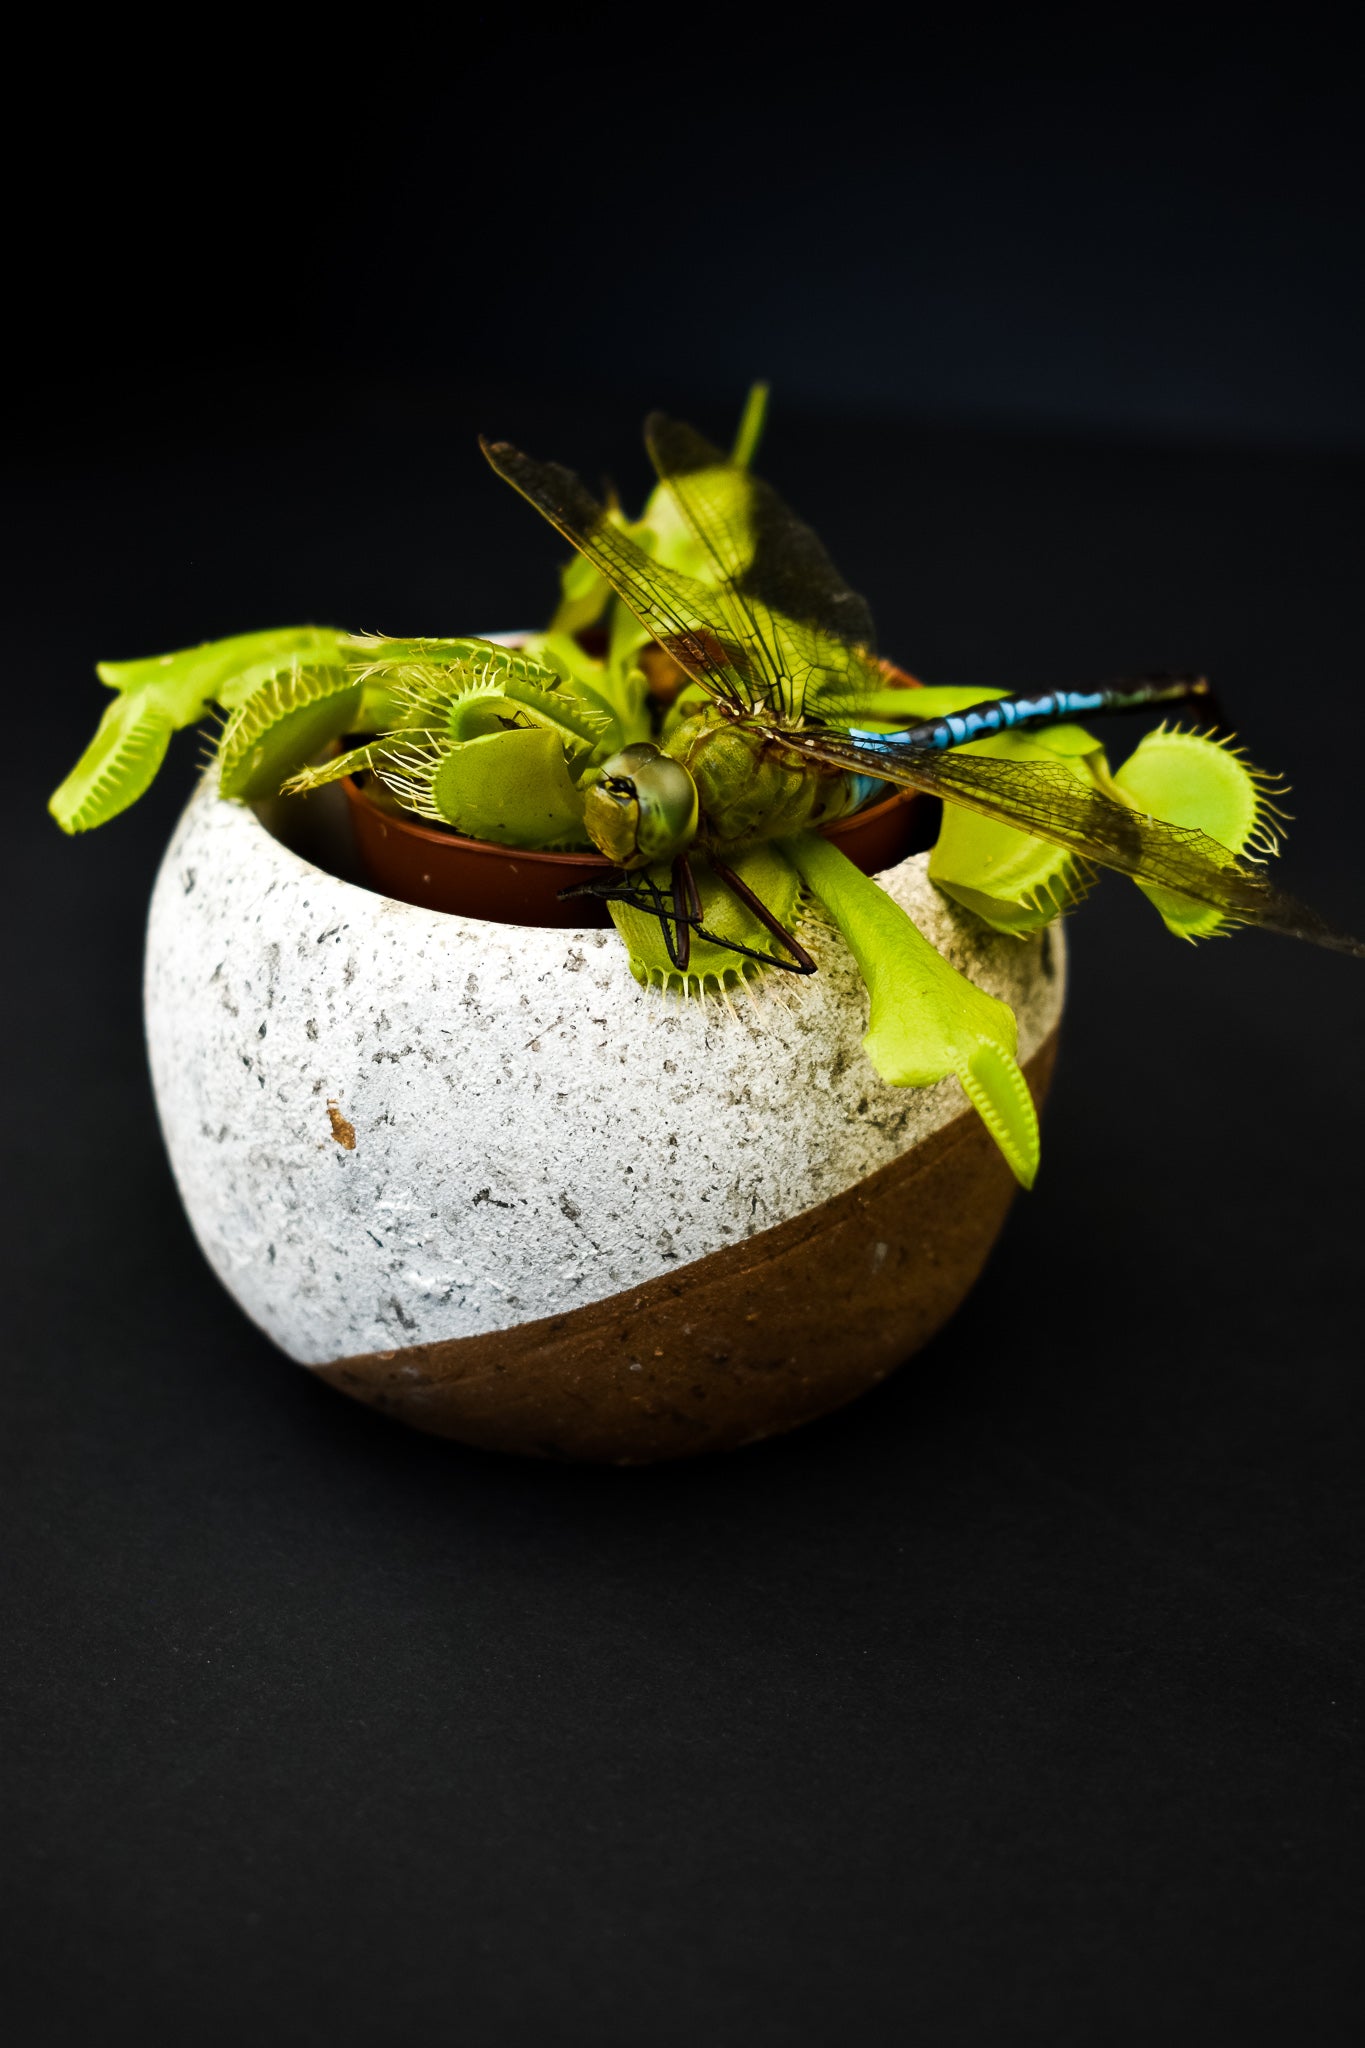 Mini plant box - "The Jaws", Venus Flytrap, Dionaea muscipula (3 plants) - Belle's Greenhouse